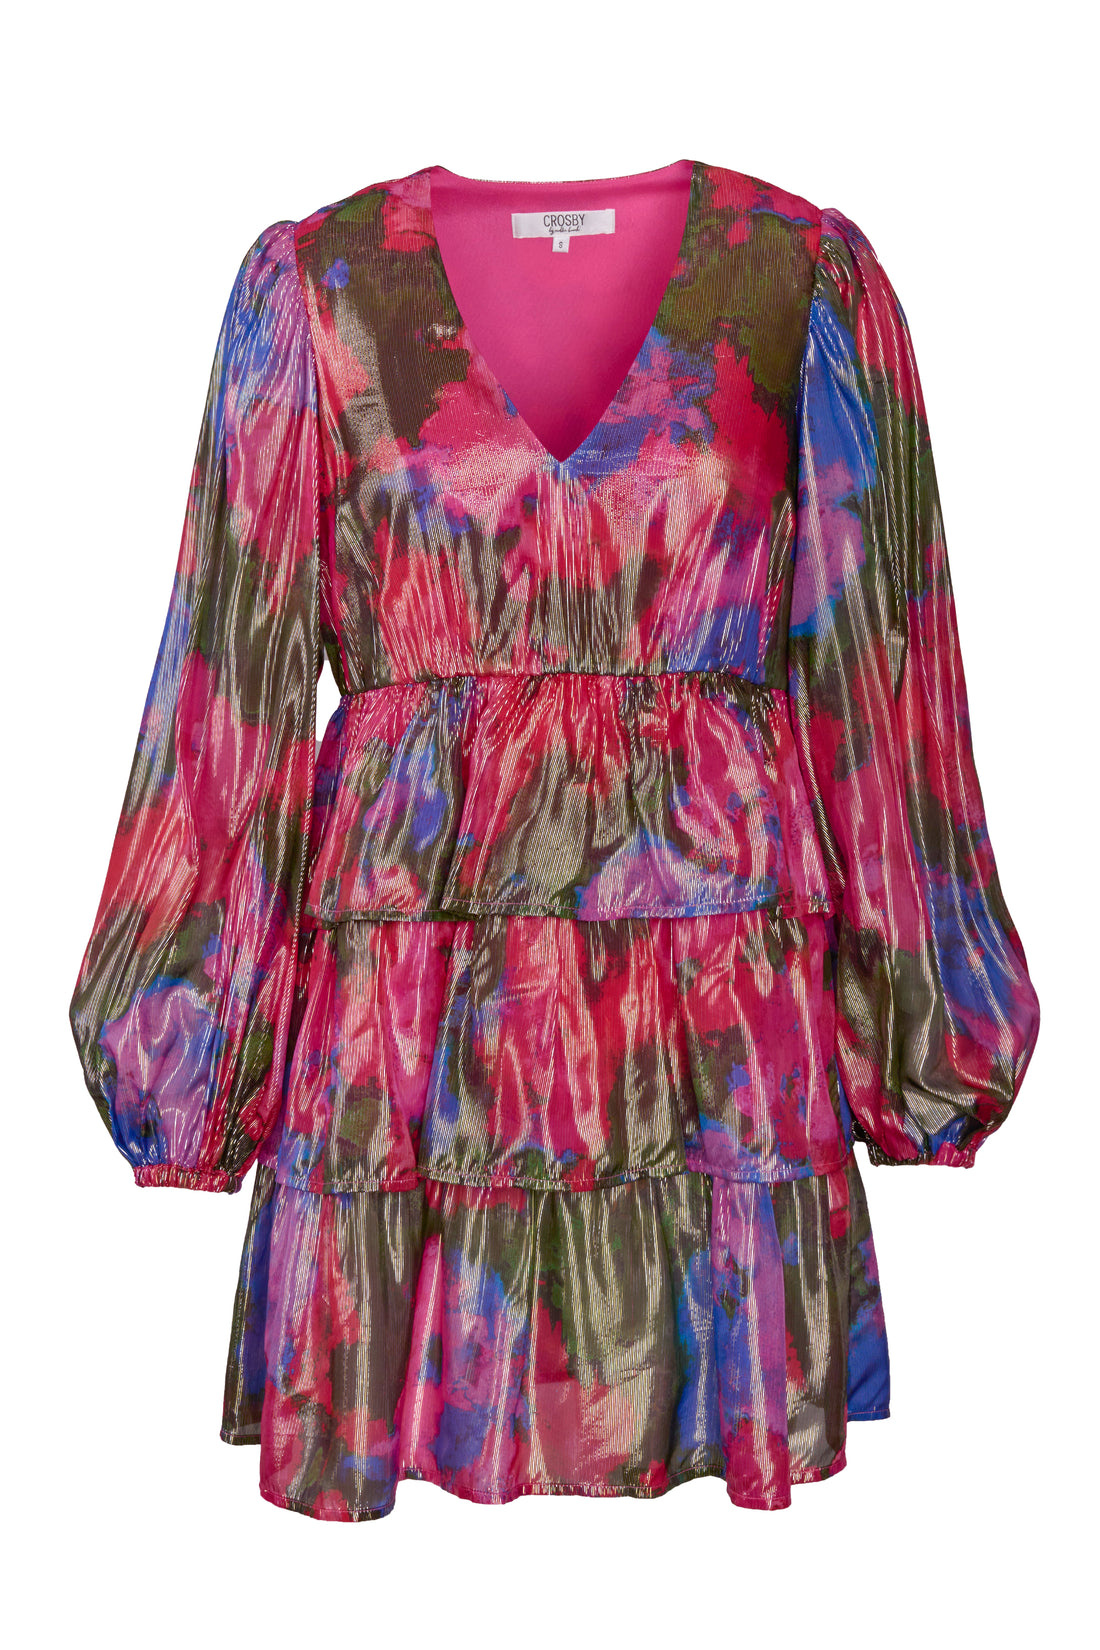 Crosby By Mollie Burch Lauren Dress Blurred Floral